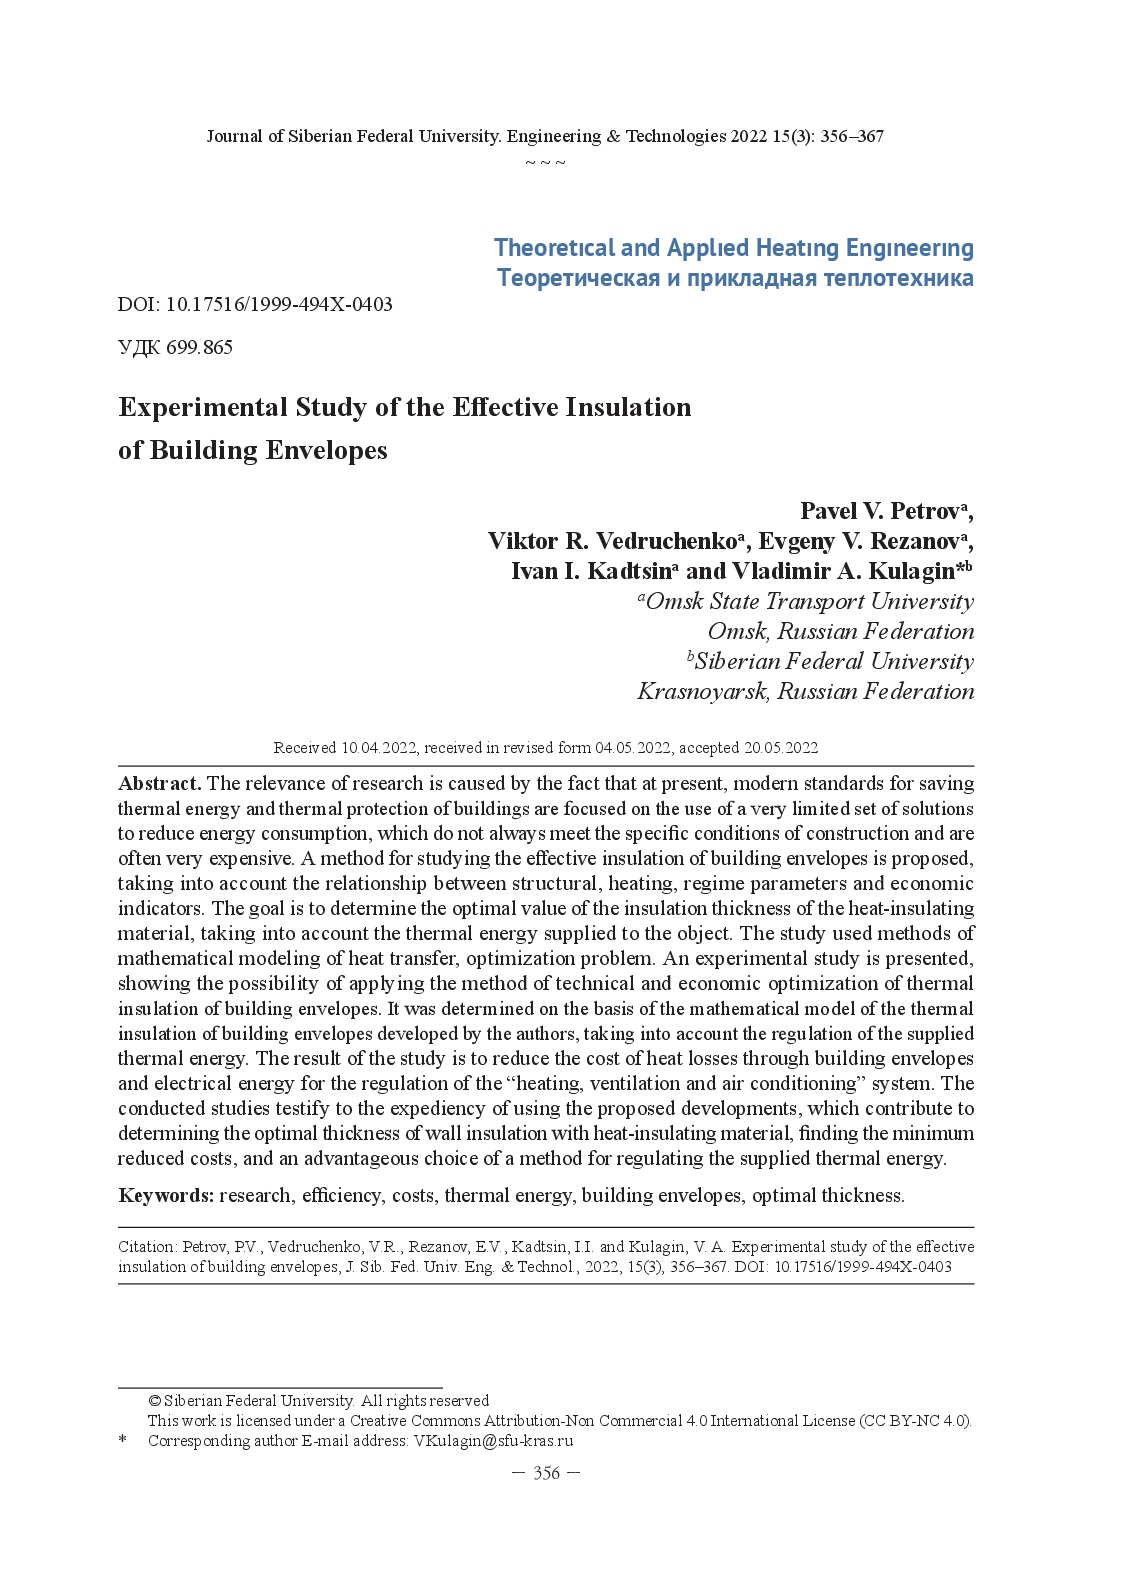 Pavel V. Petrov Experimental Study of the Effective Insulation of Building Envelopes